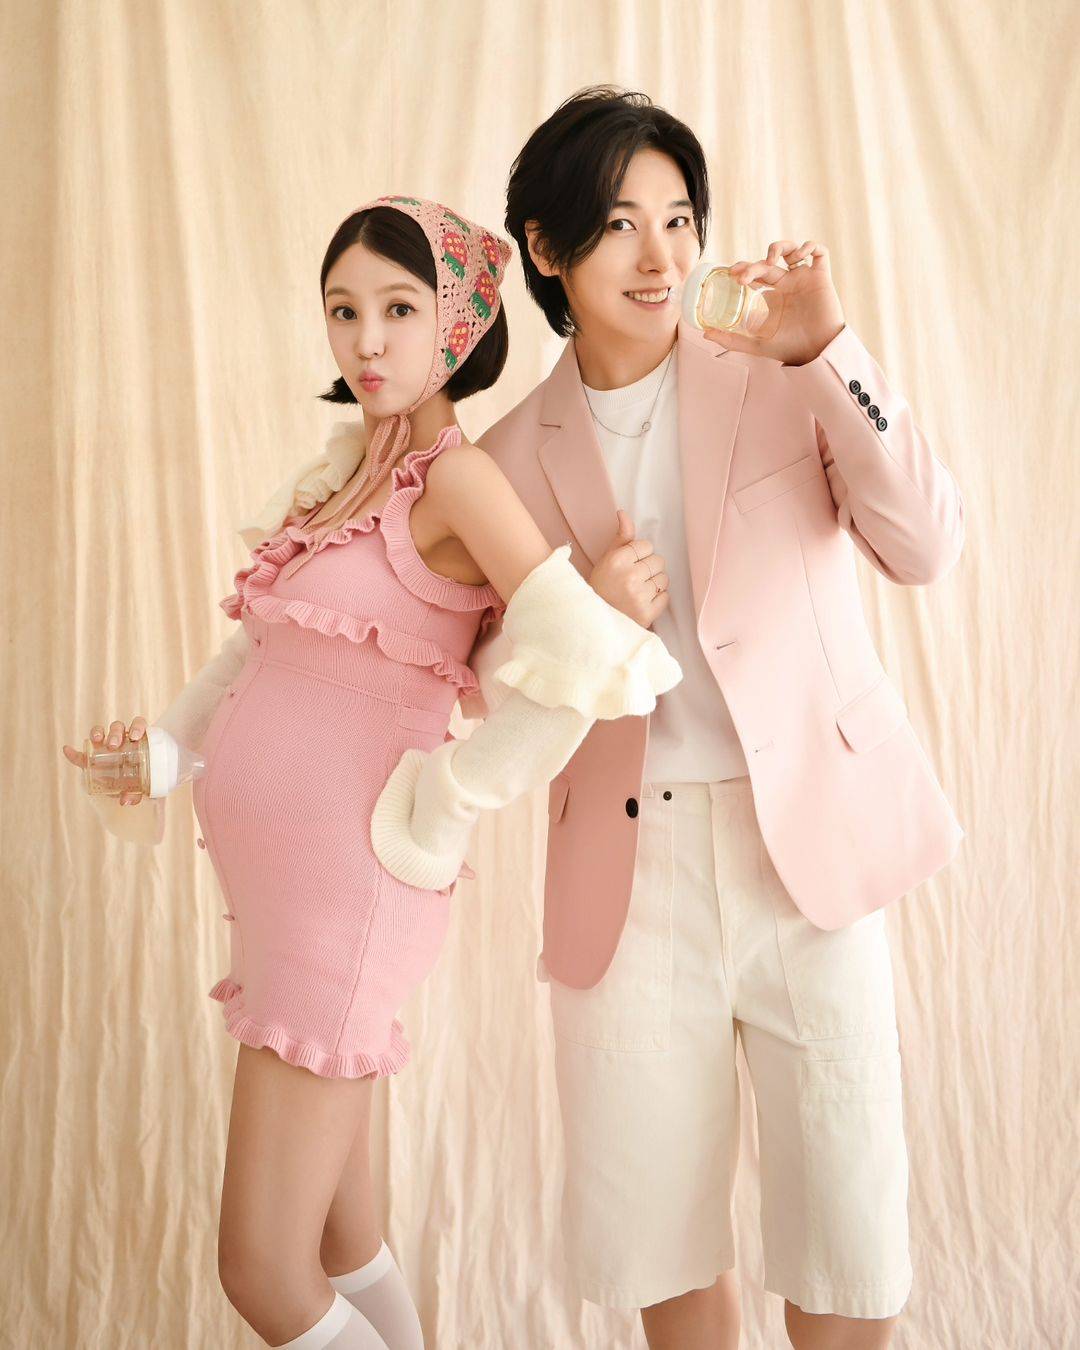 superjunior成员李晟敏结婚10年当爸 老婆晒孕肚照预产期为9月